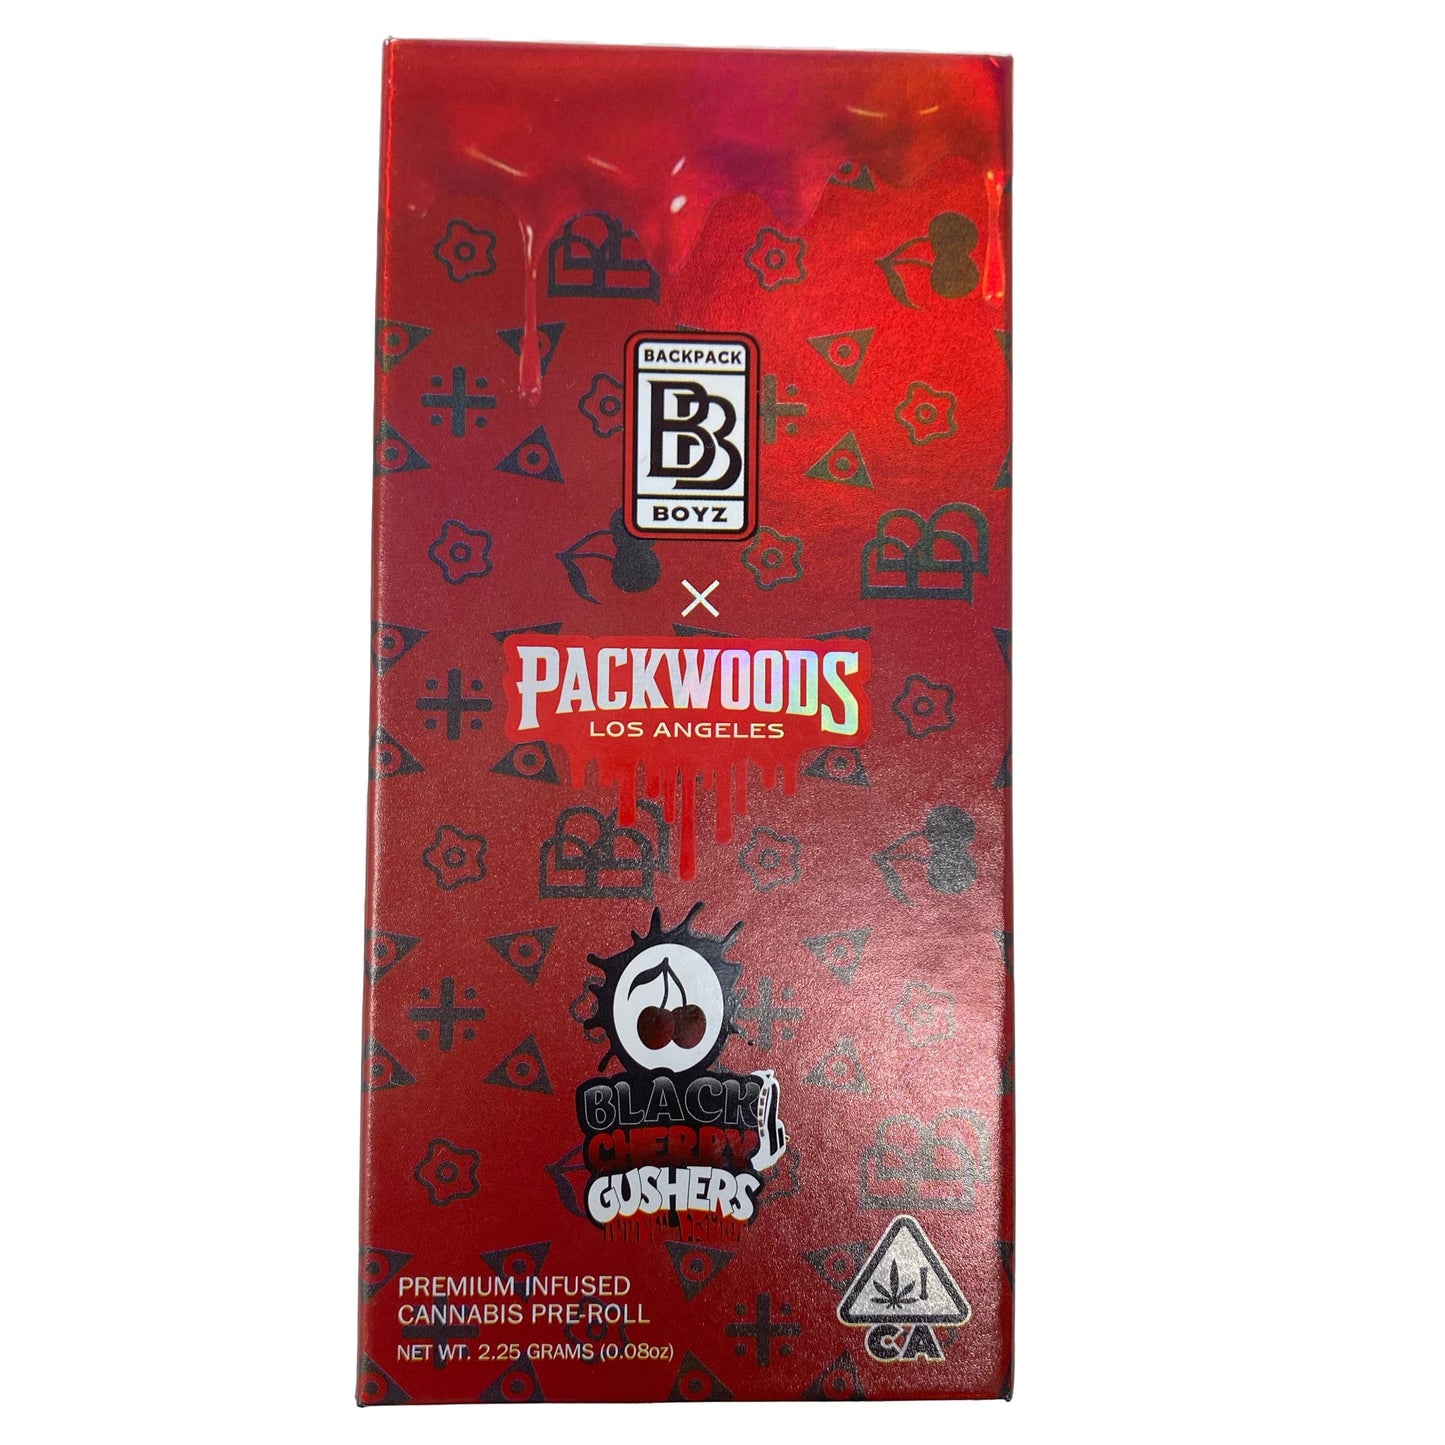 PACKWOODS X BACKPACK BOYZ! BRAND NEW Pre-roll Tube Packaging